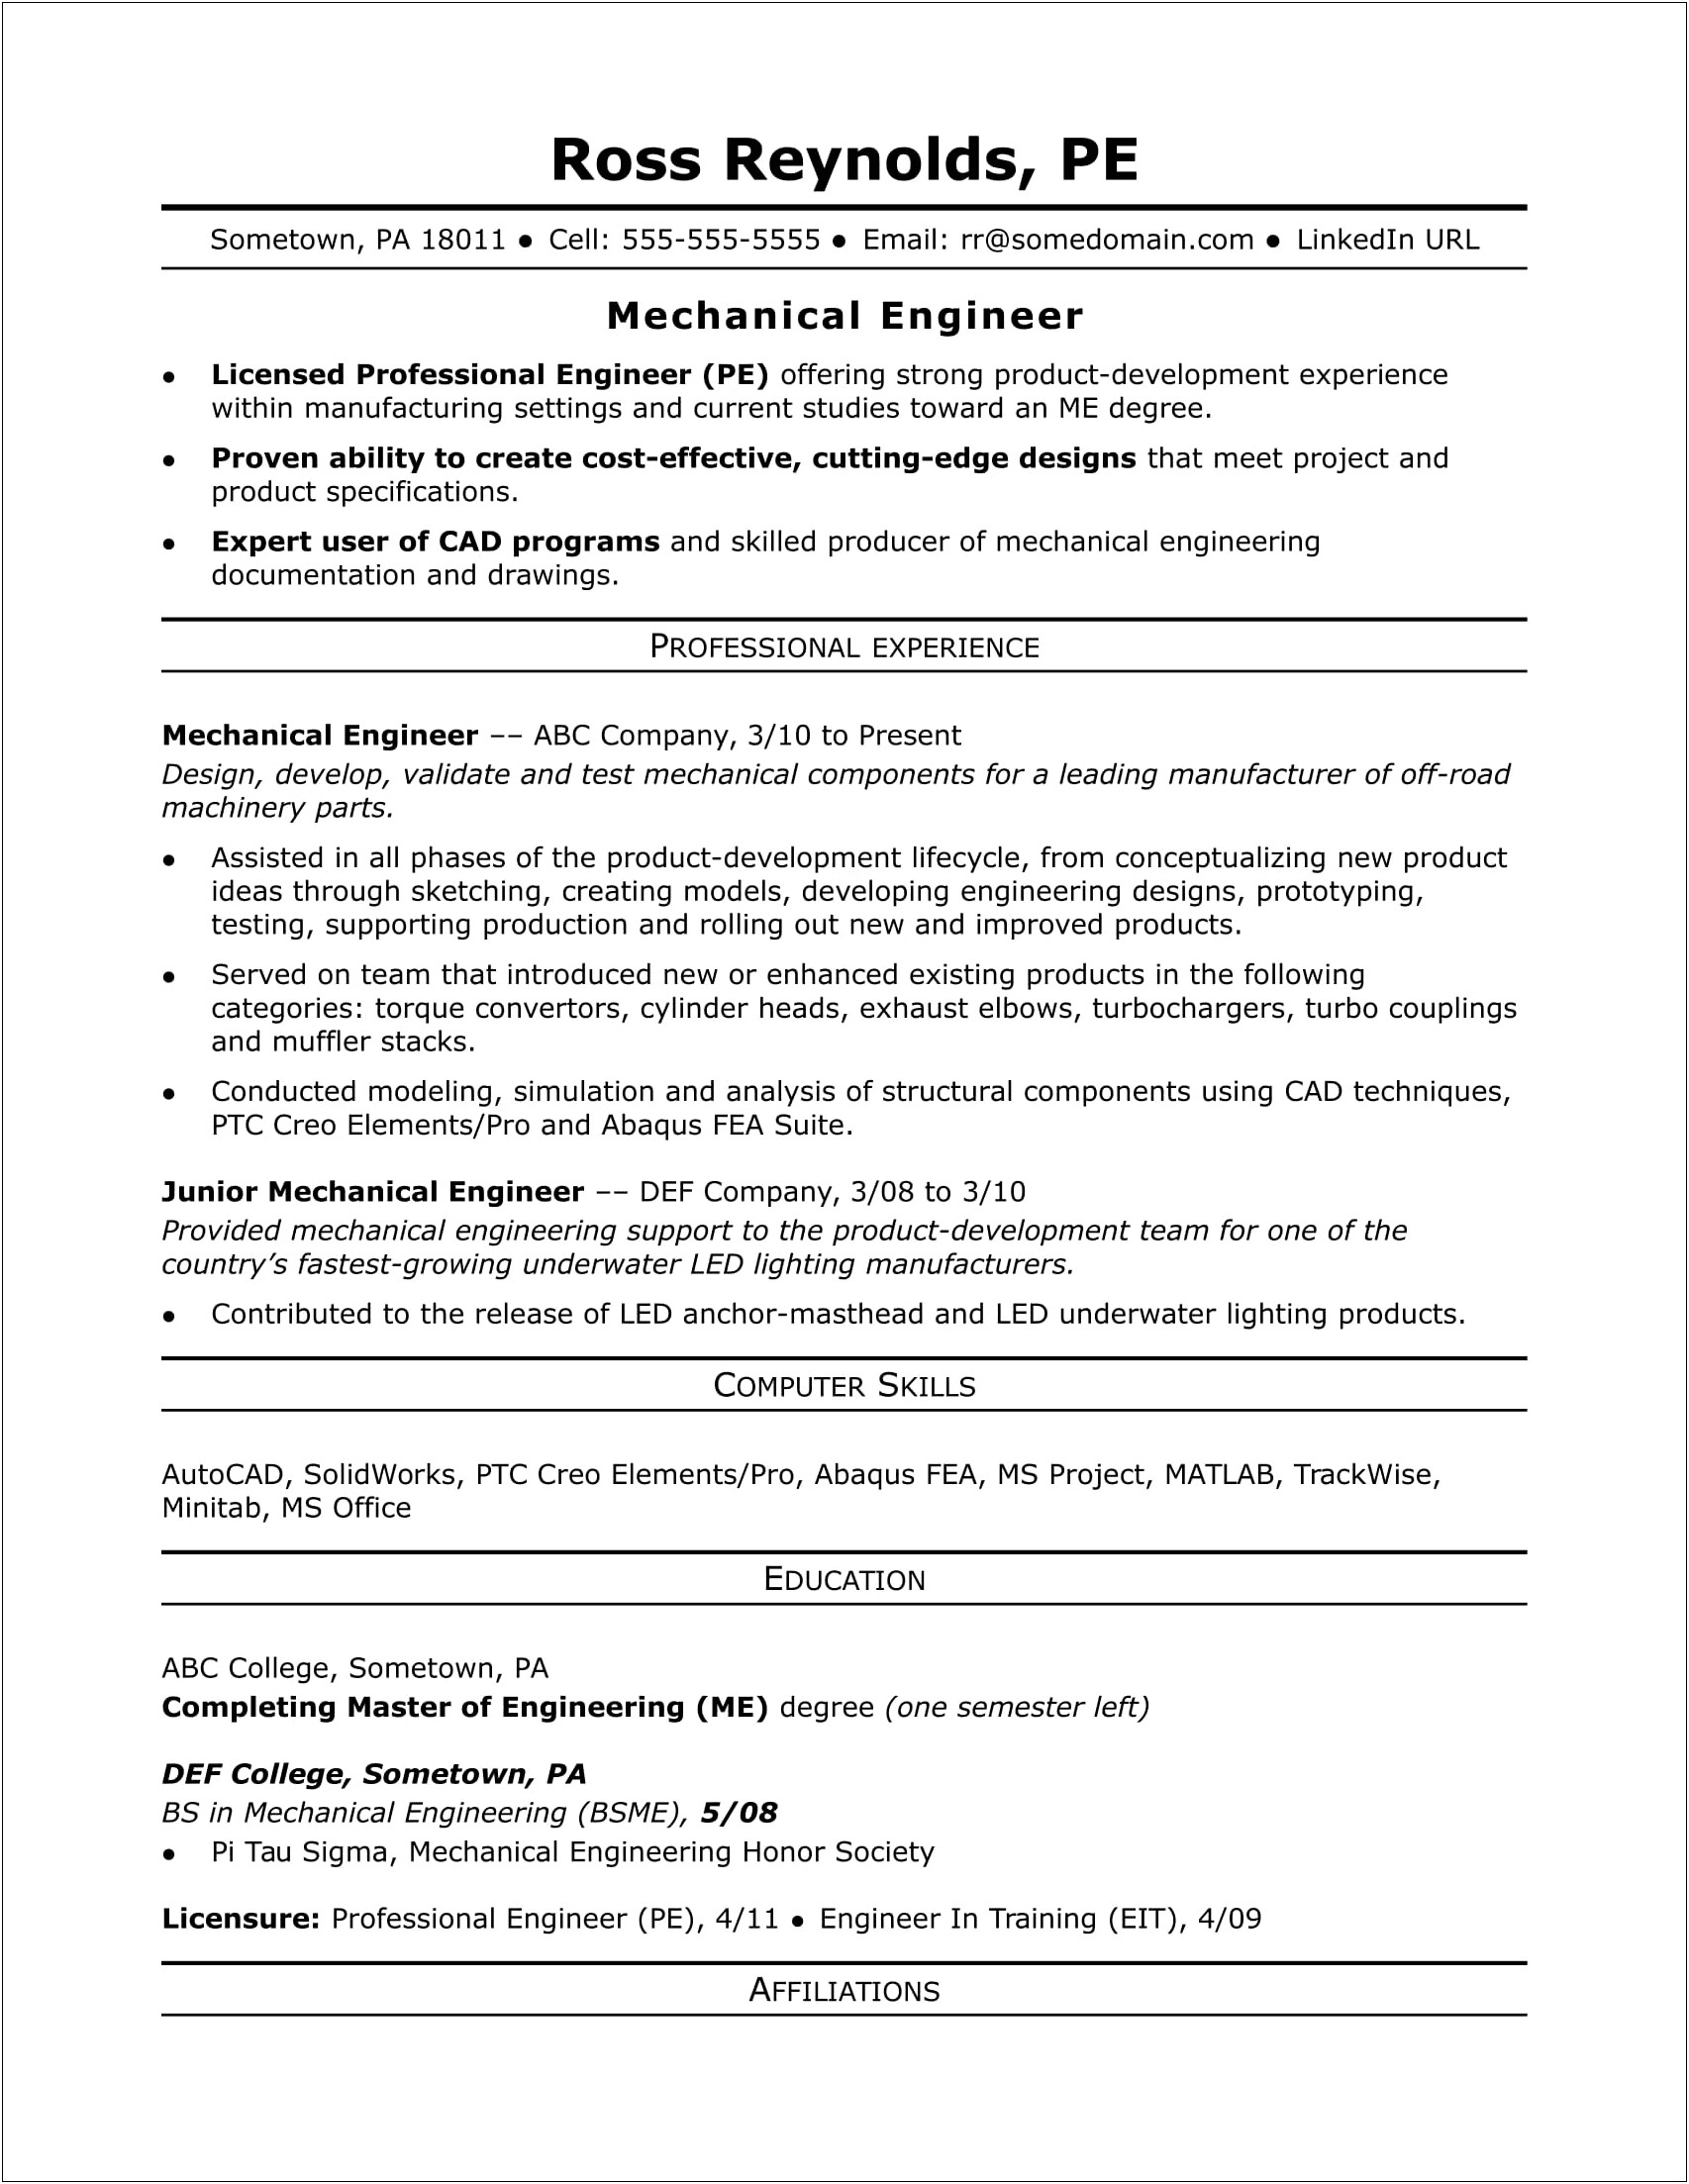 Mechanical Engineer 3 Years Experience Resume